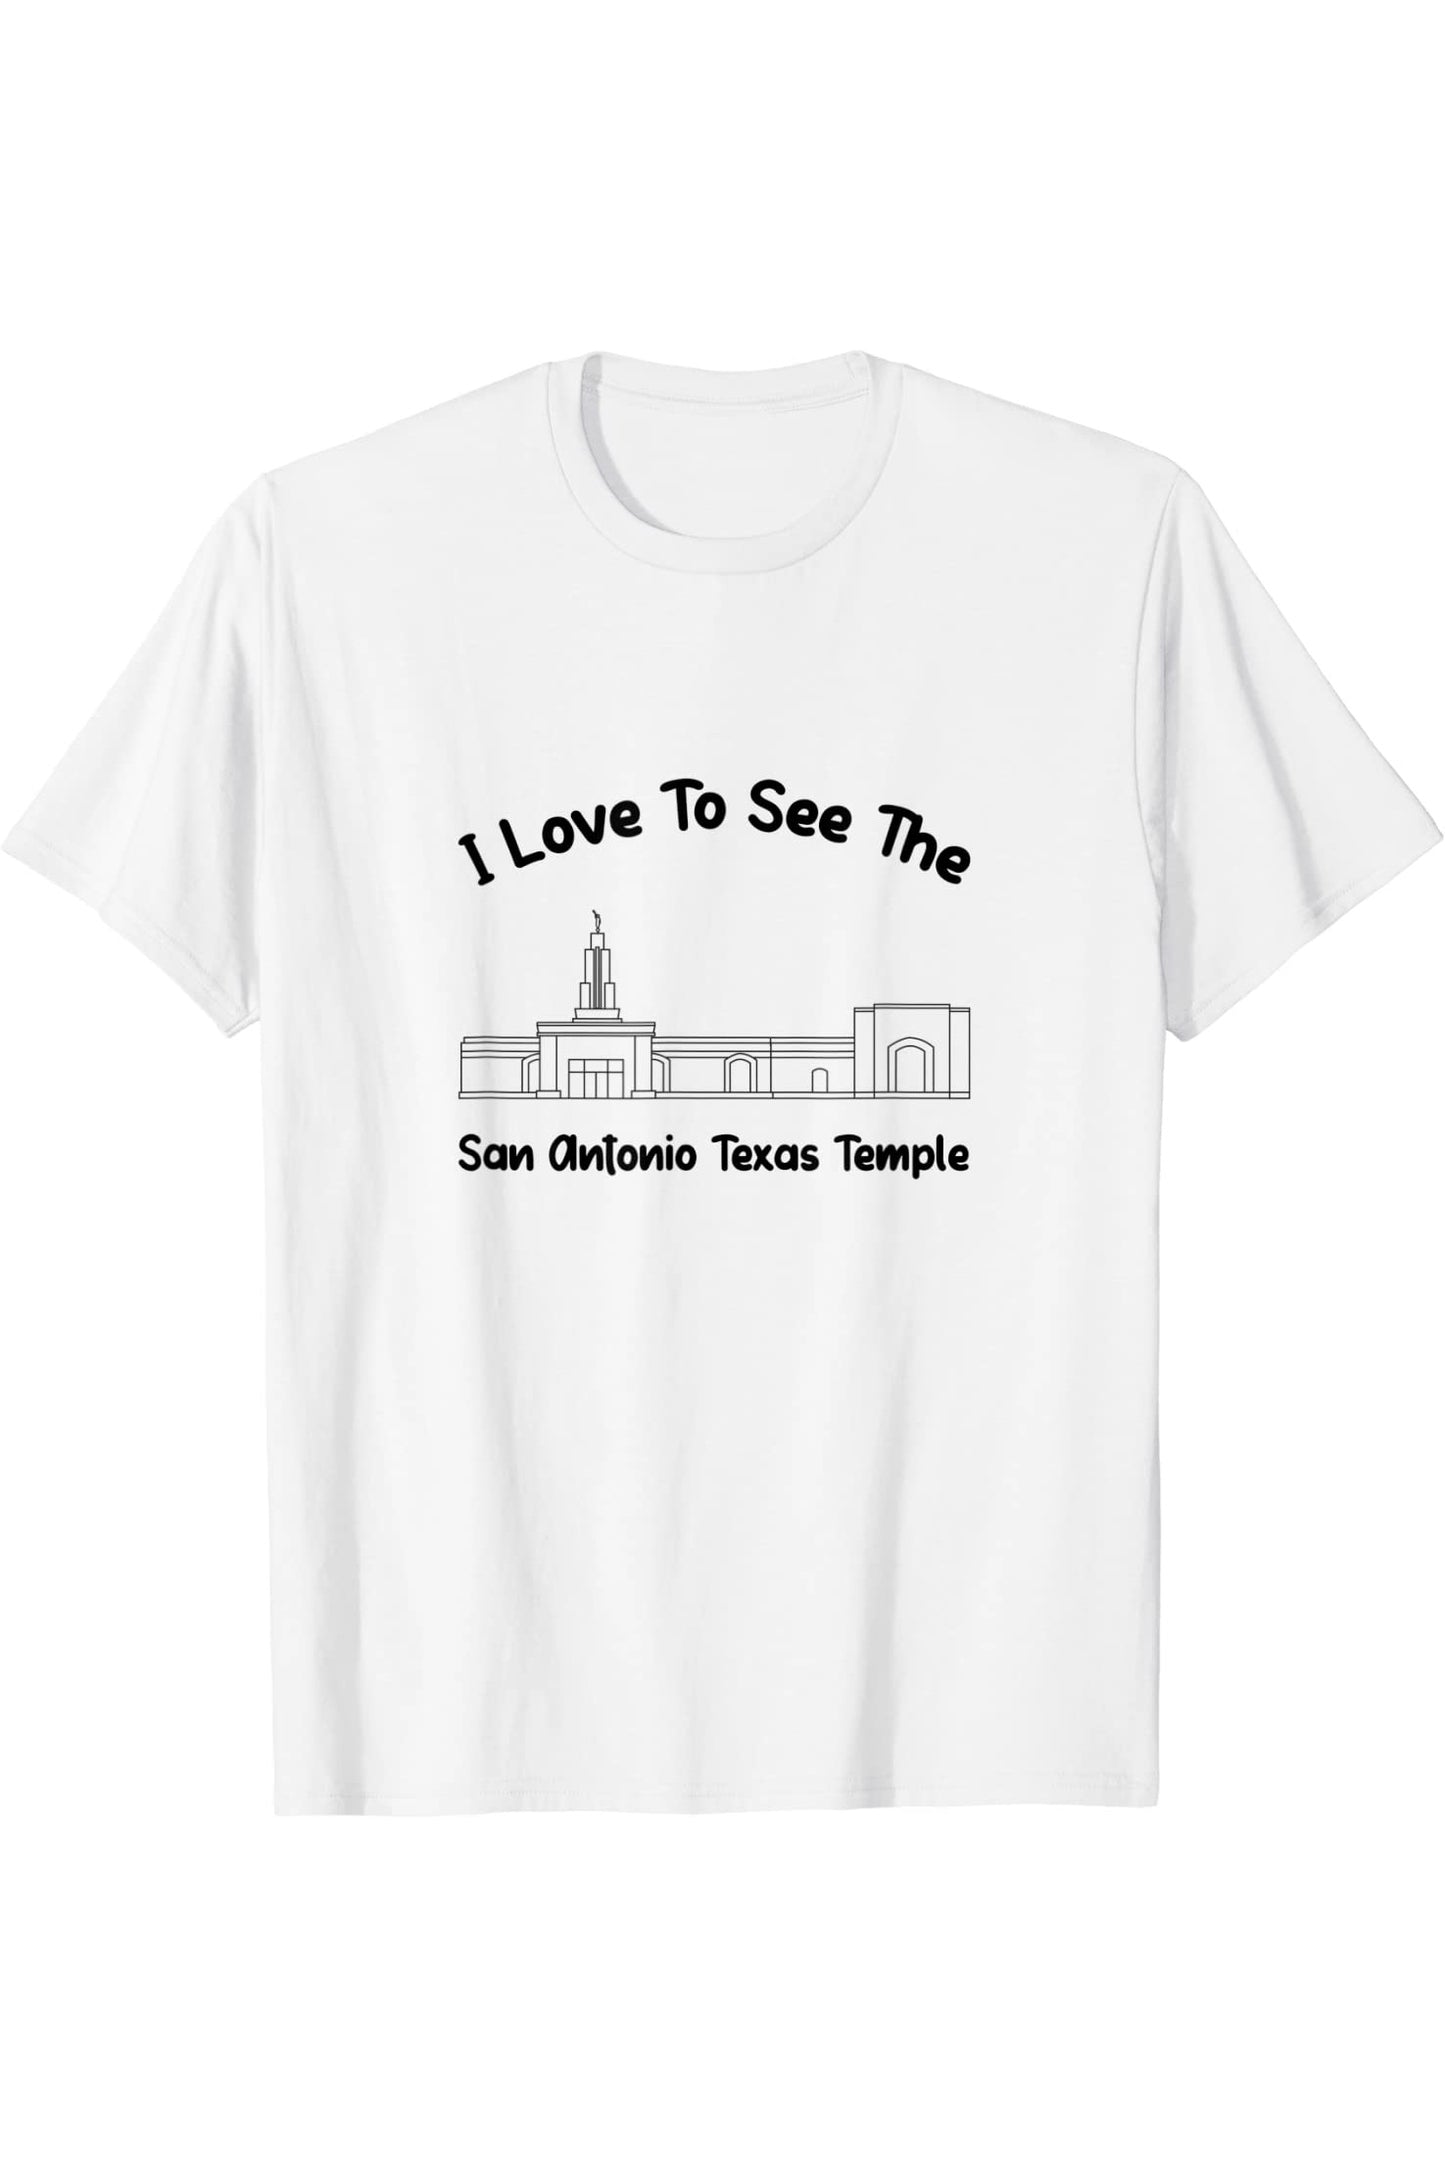 San Antonio Texas Temple T-Shirt - Primary Style (English) US